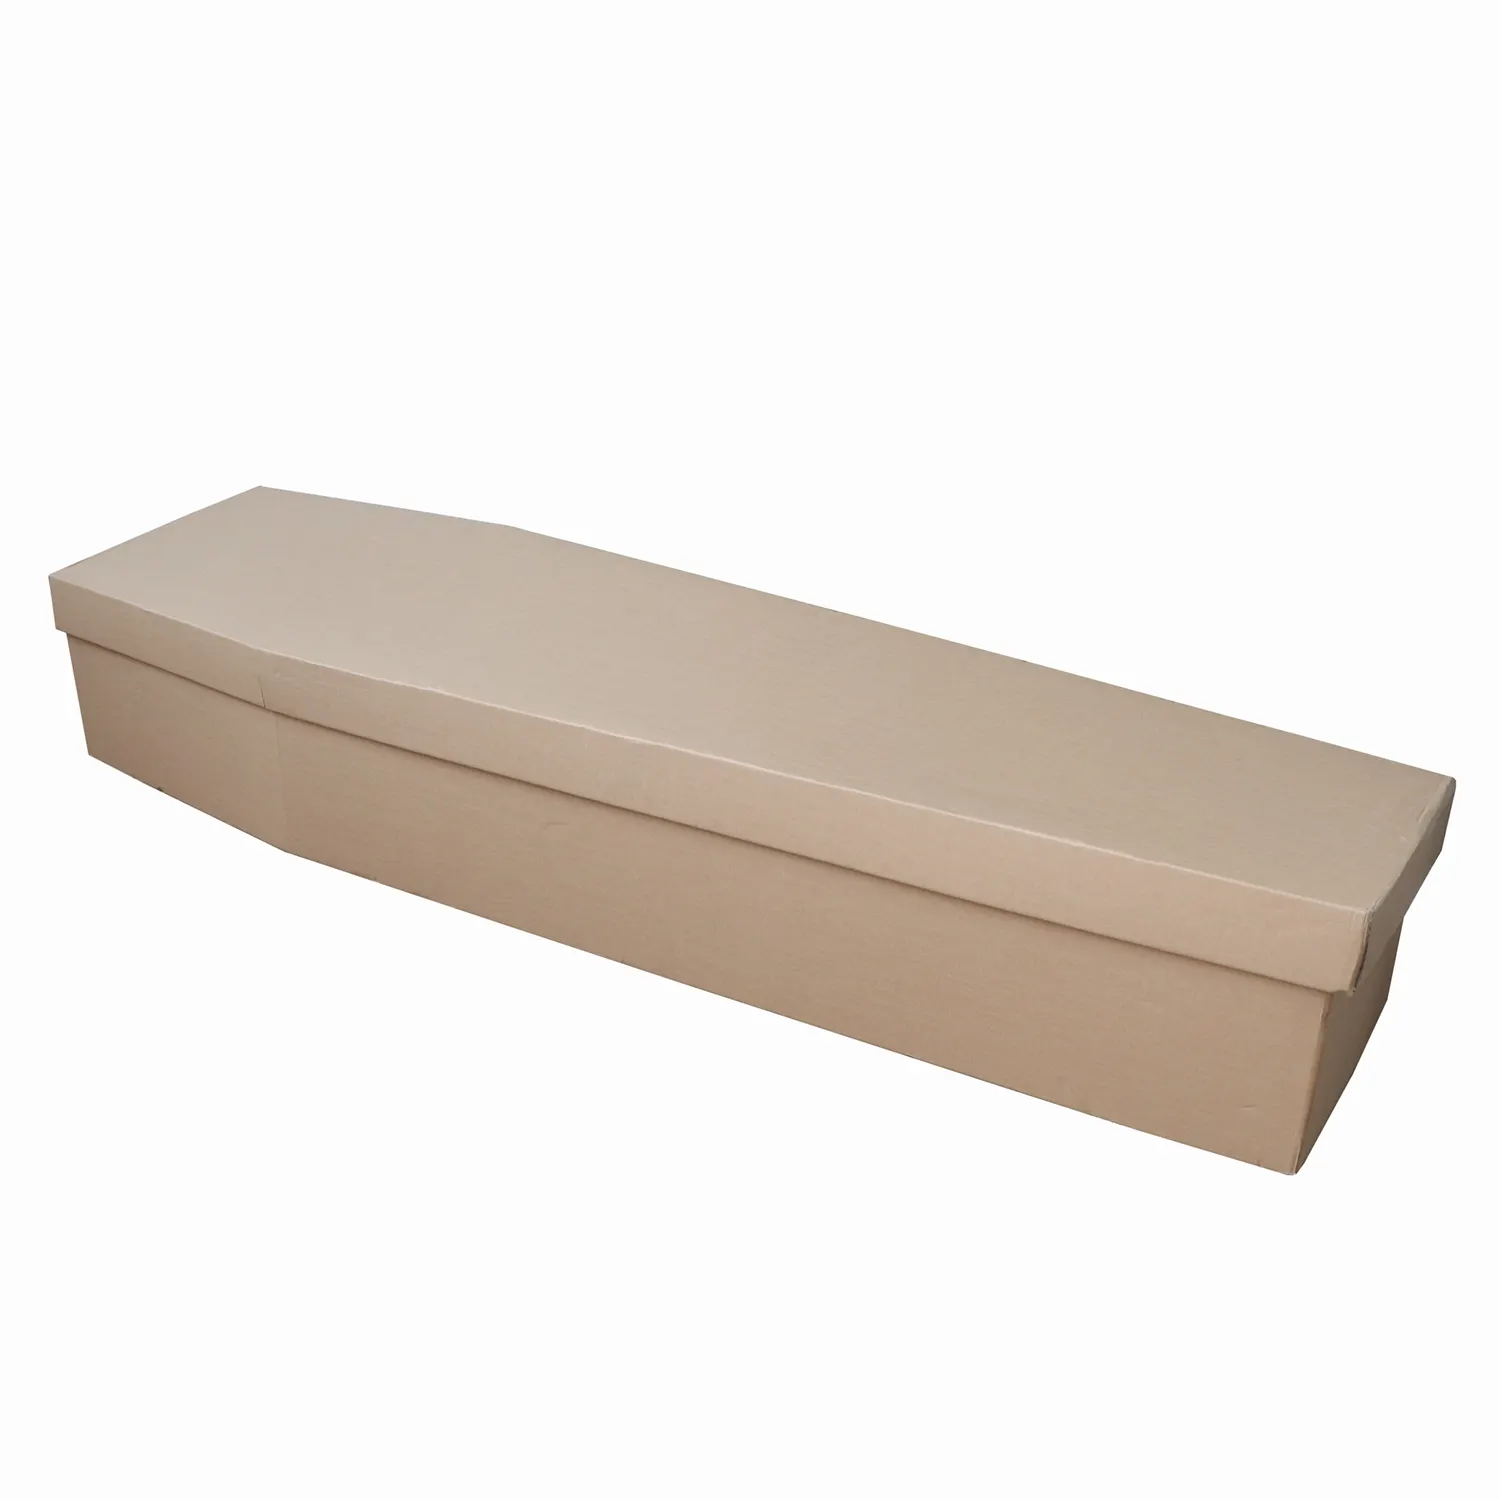 CE-01 Assembled biodegradable cremation cardboard coffins prices manufacturer cardboard coffins